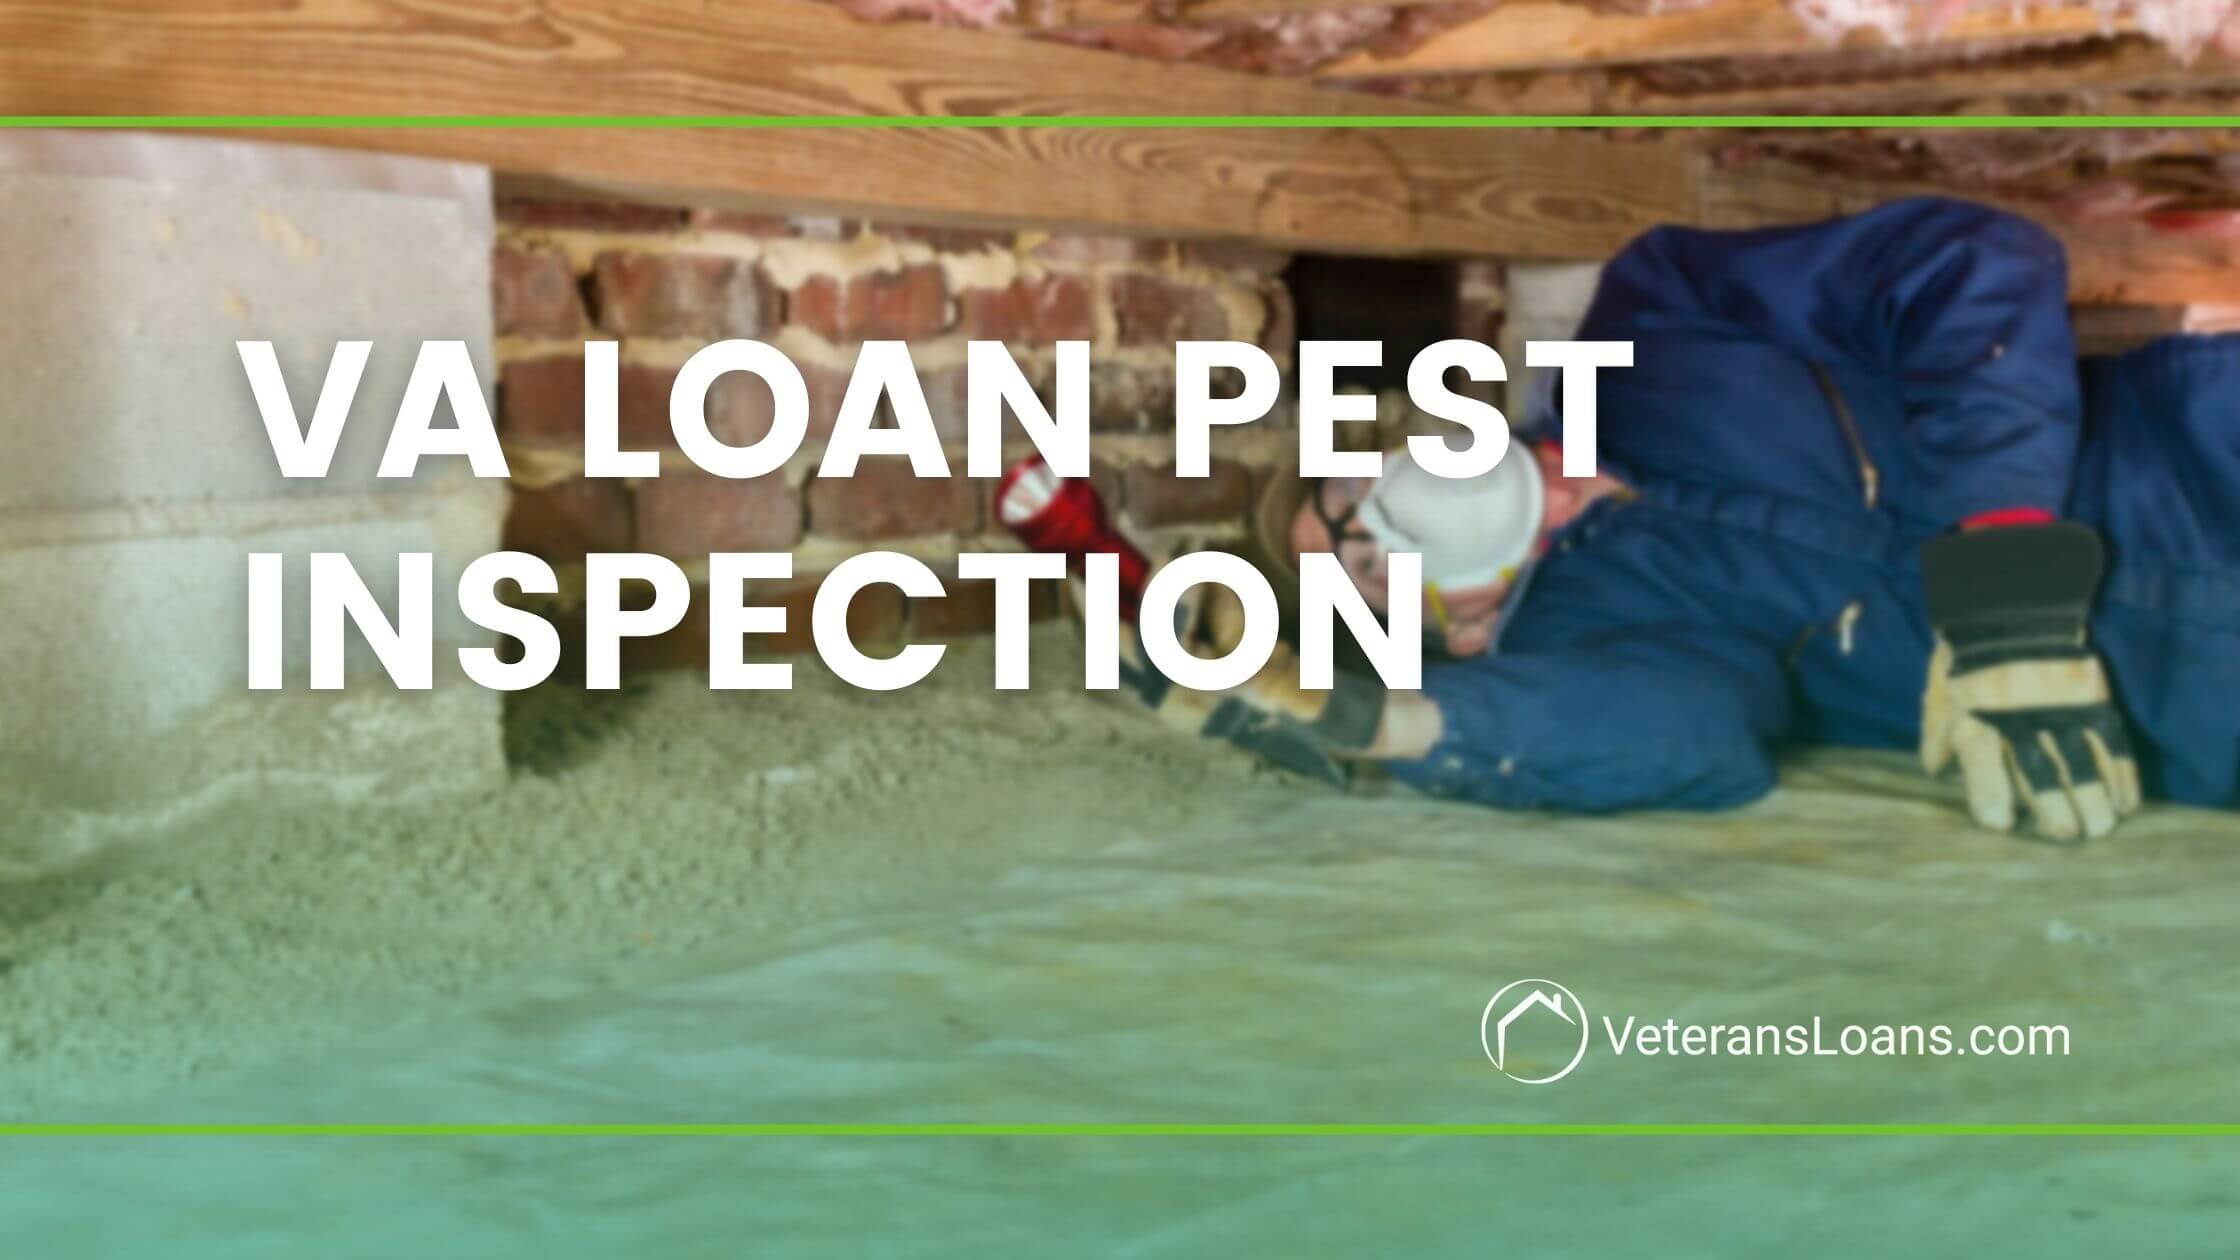 VA Loan Pest Inspection Requirements Blog